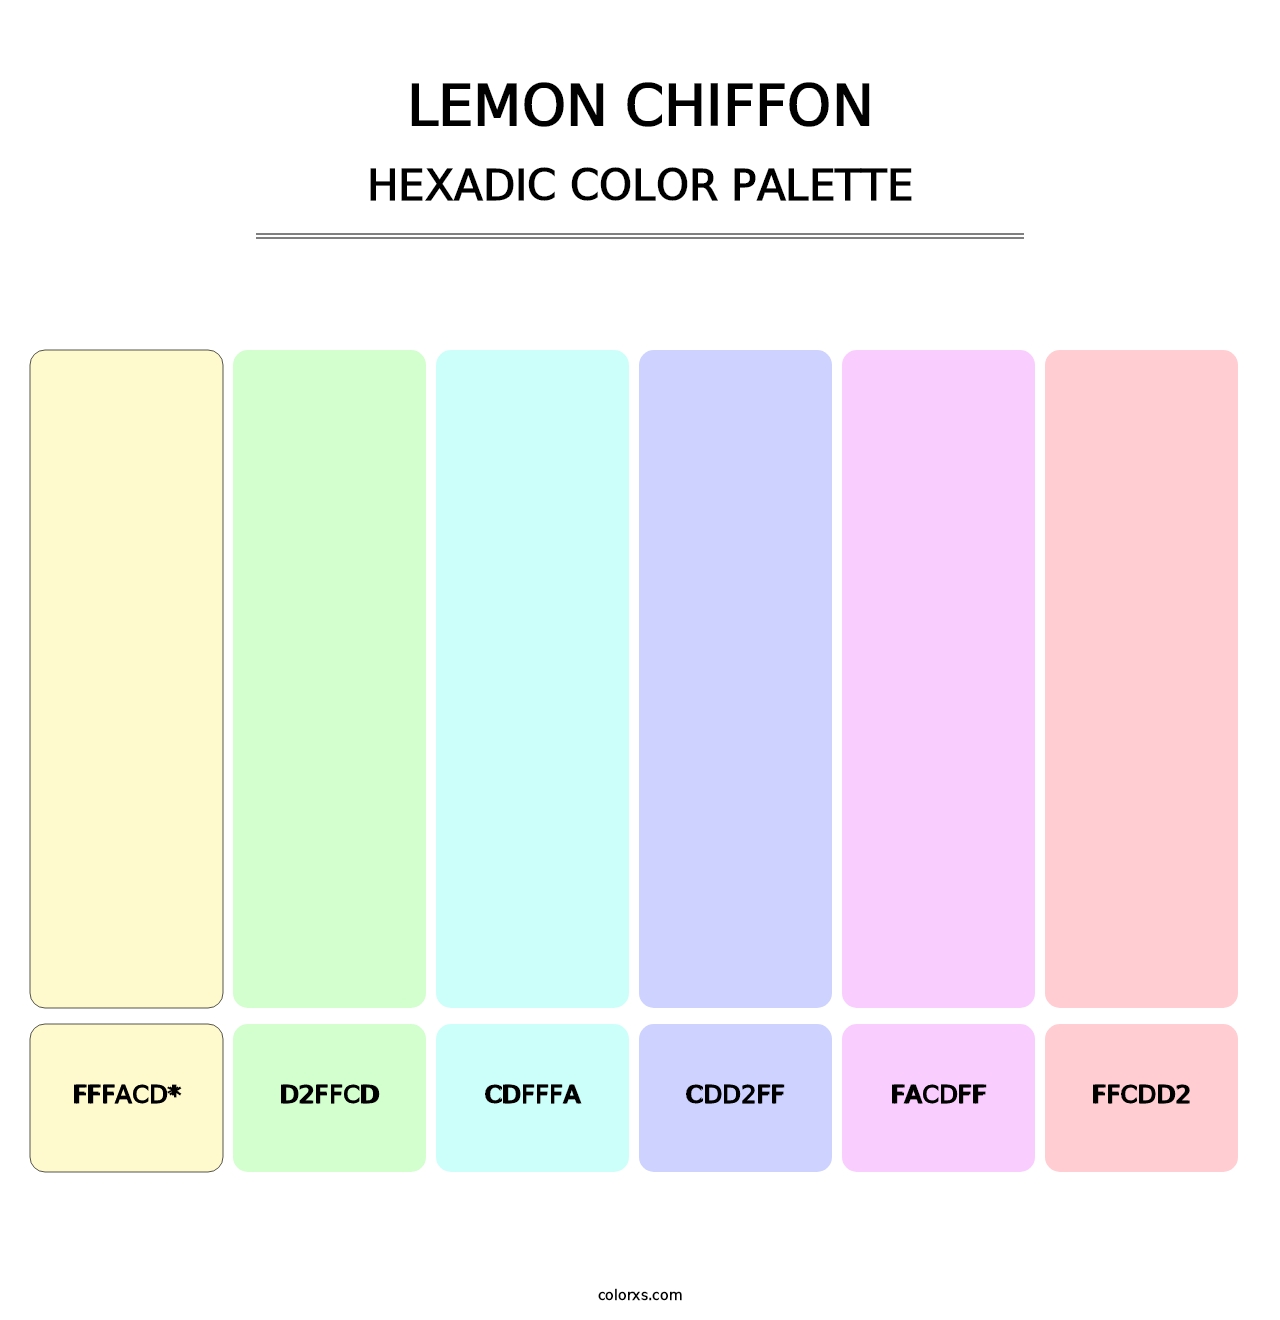 Lemon Chiffon - Hexadic Color Palette